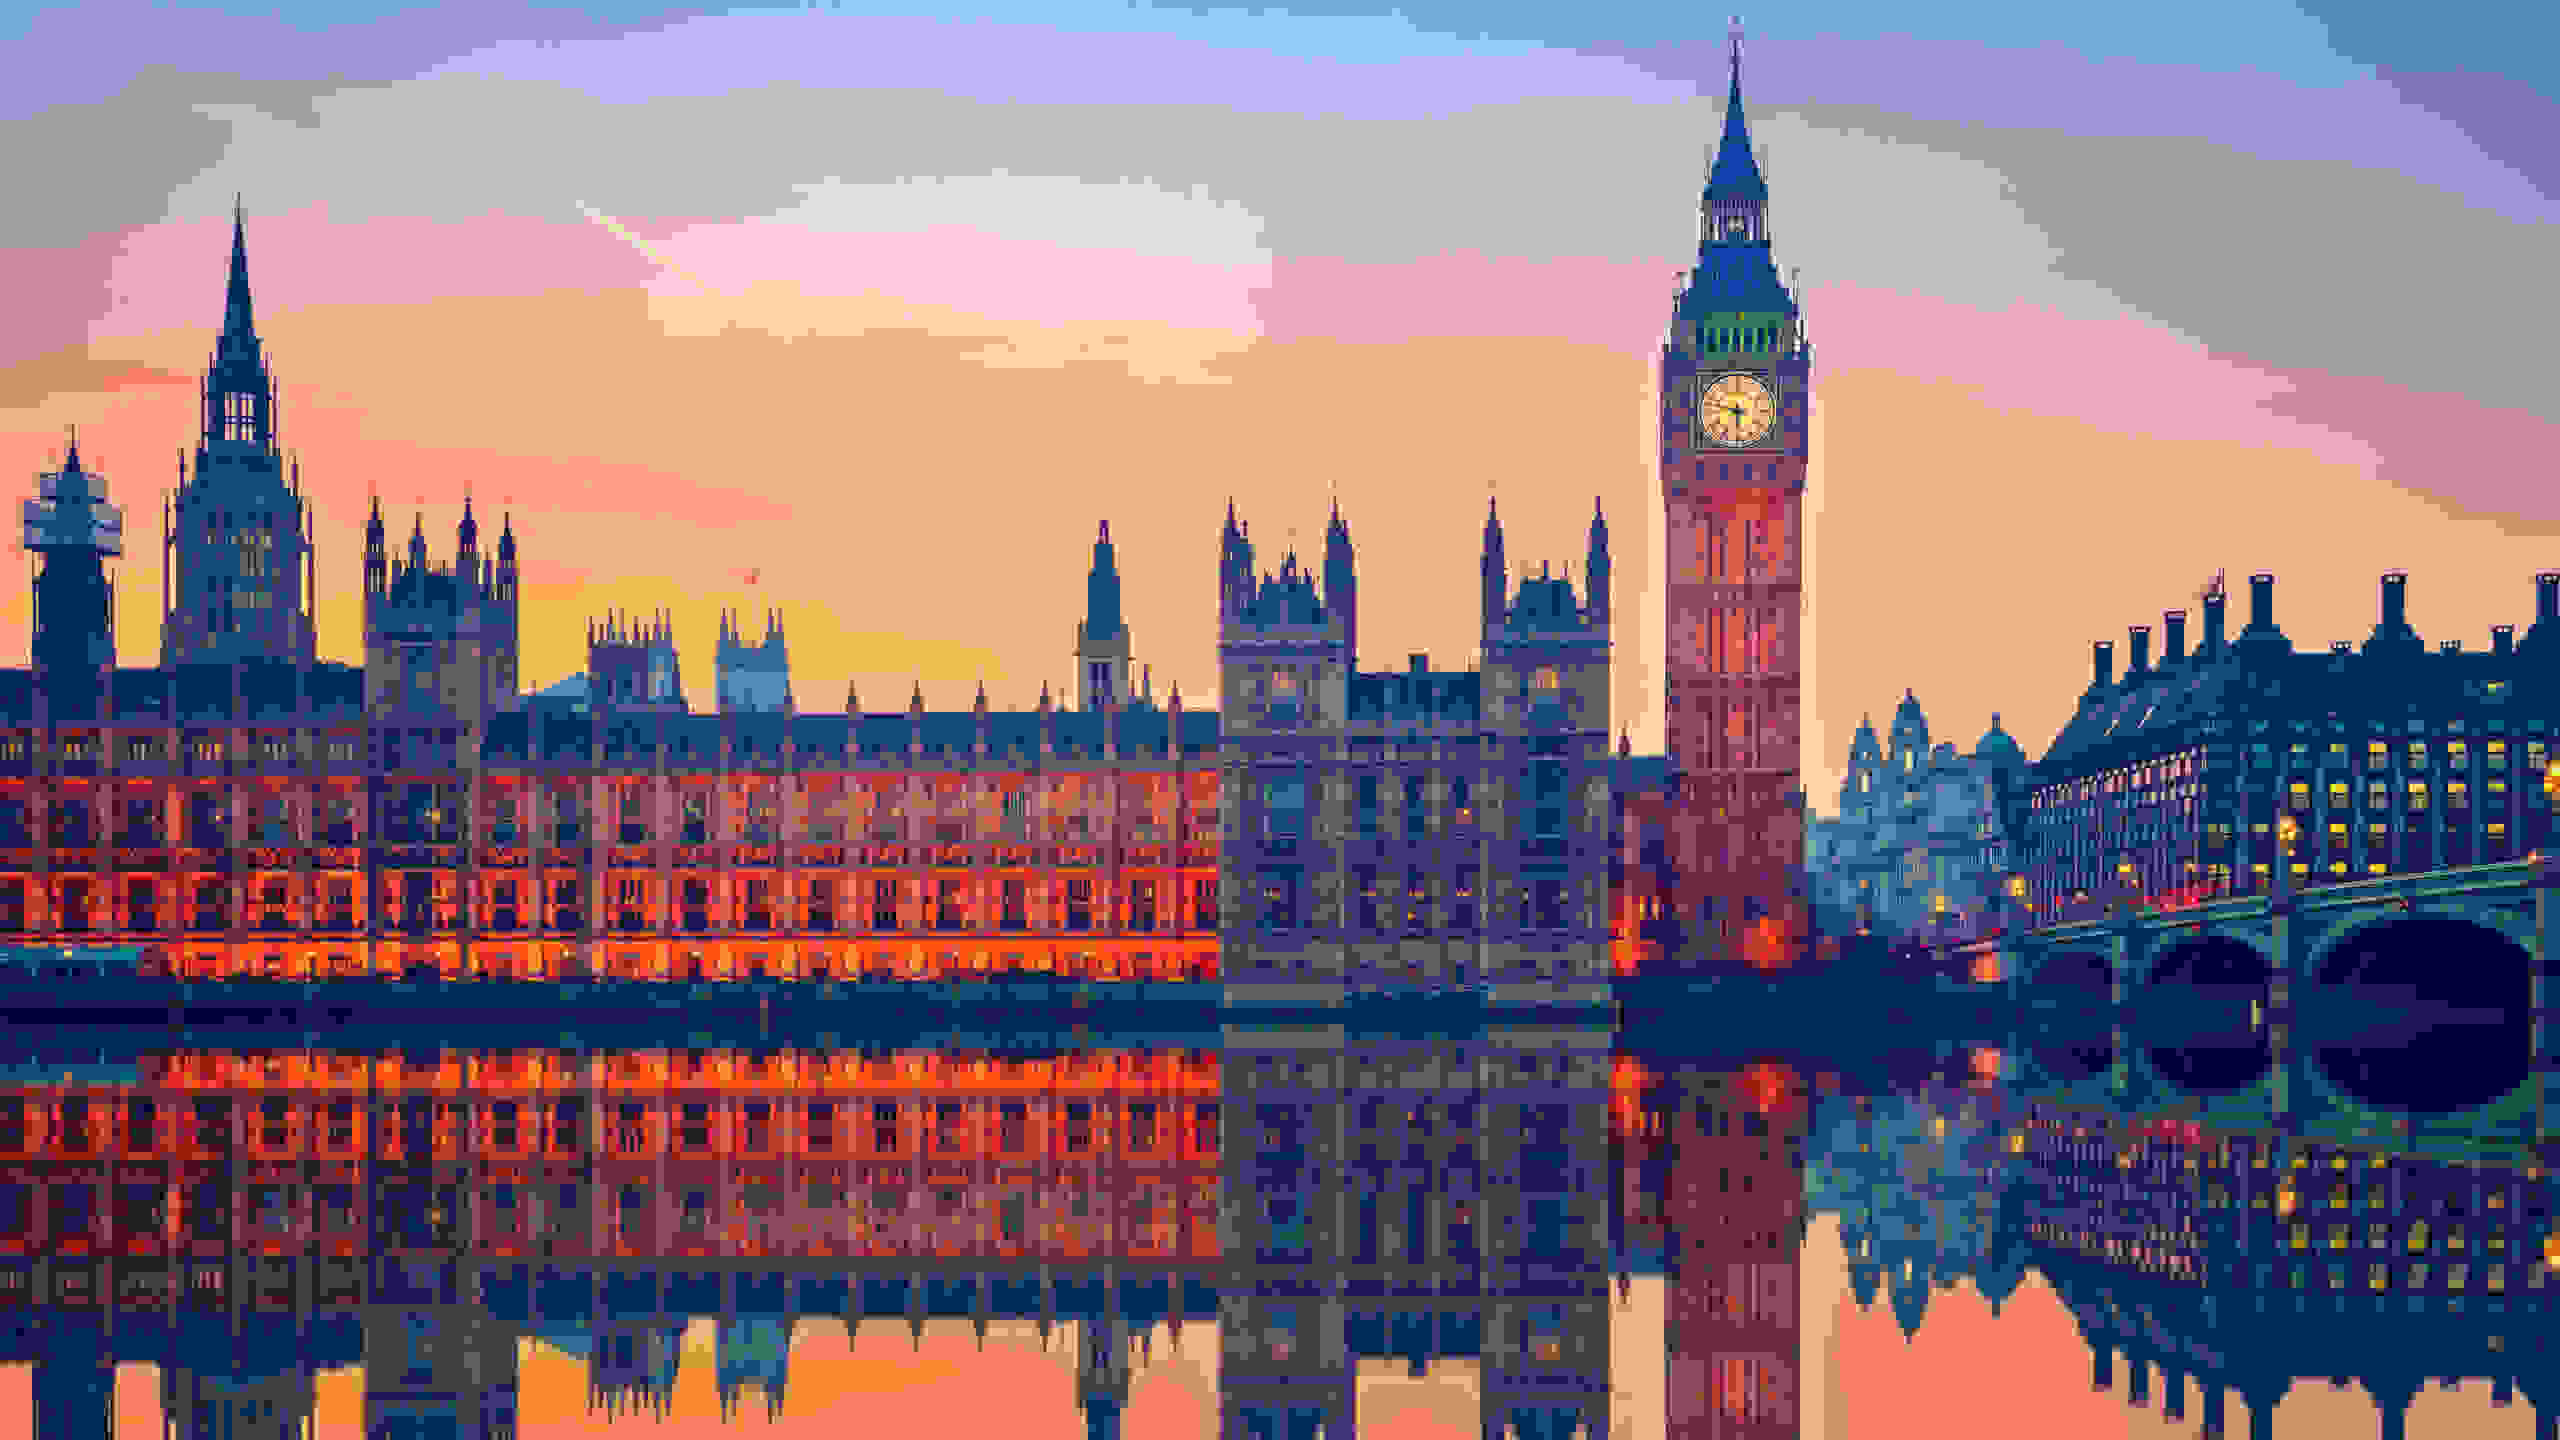 Parliament at dusk